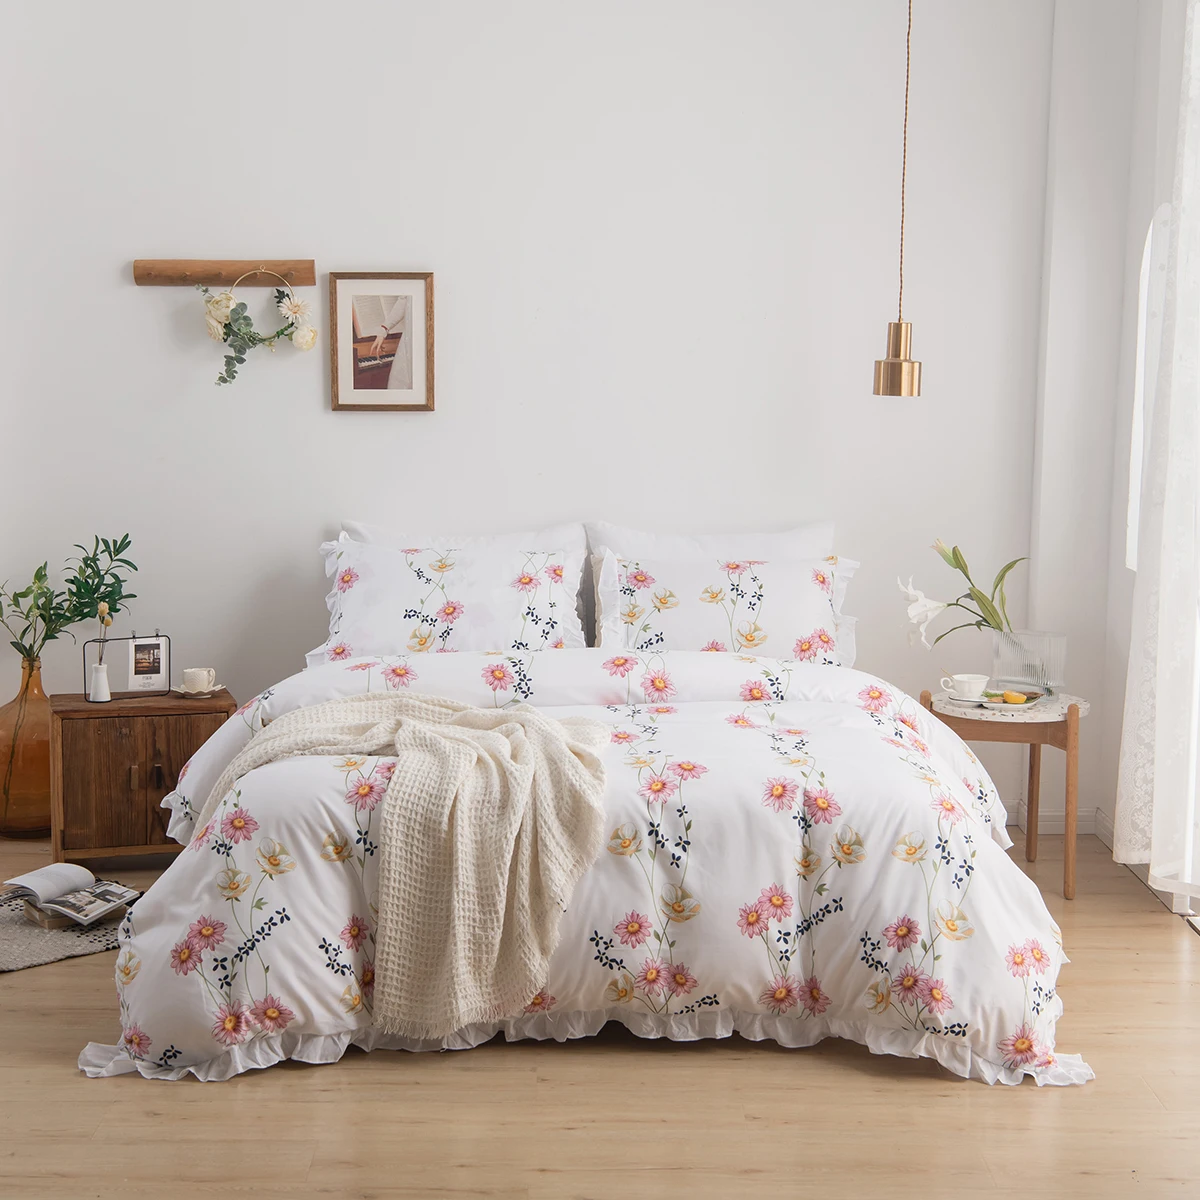 

Flourish Ready to Ship Wholesale Comforter Bed Sheet Bedding Set King Size home textiles